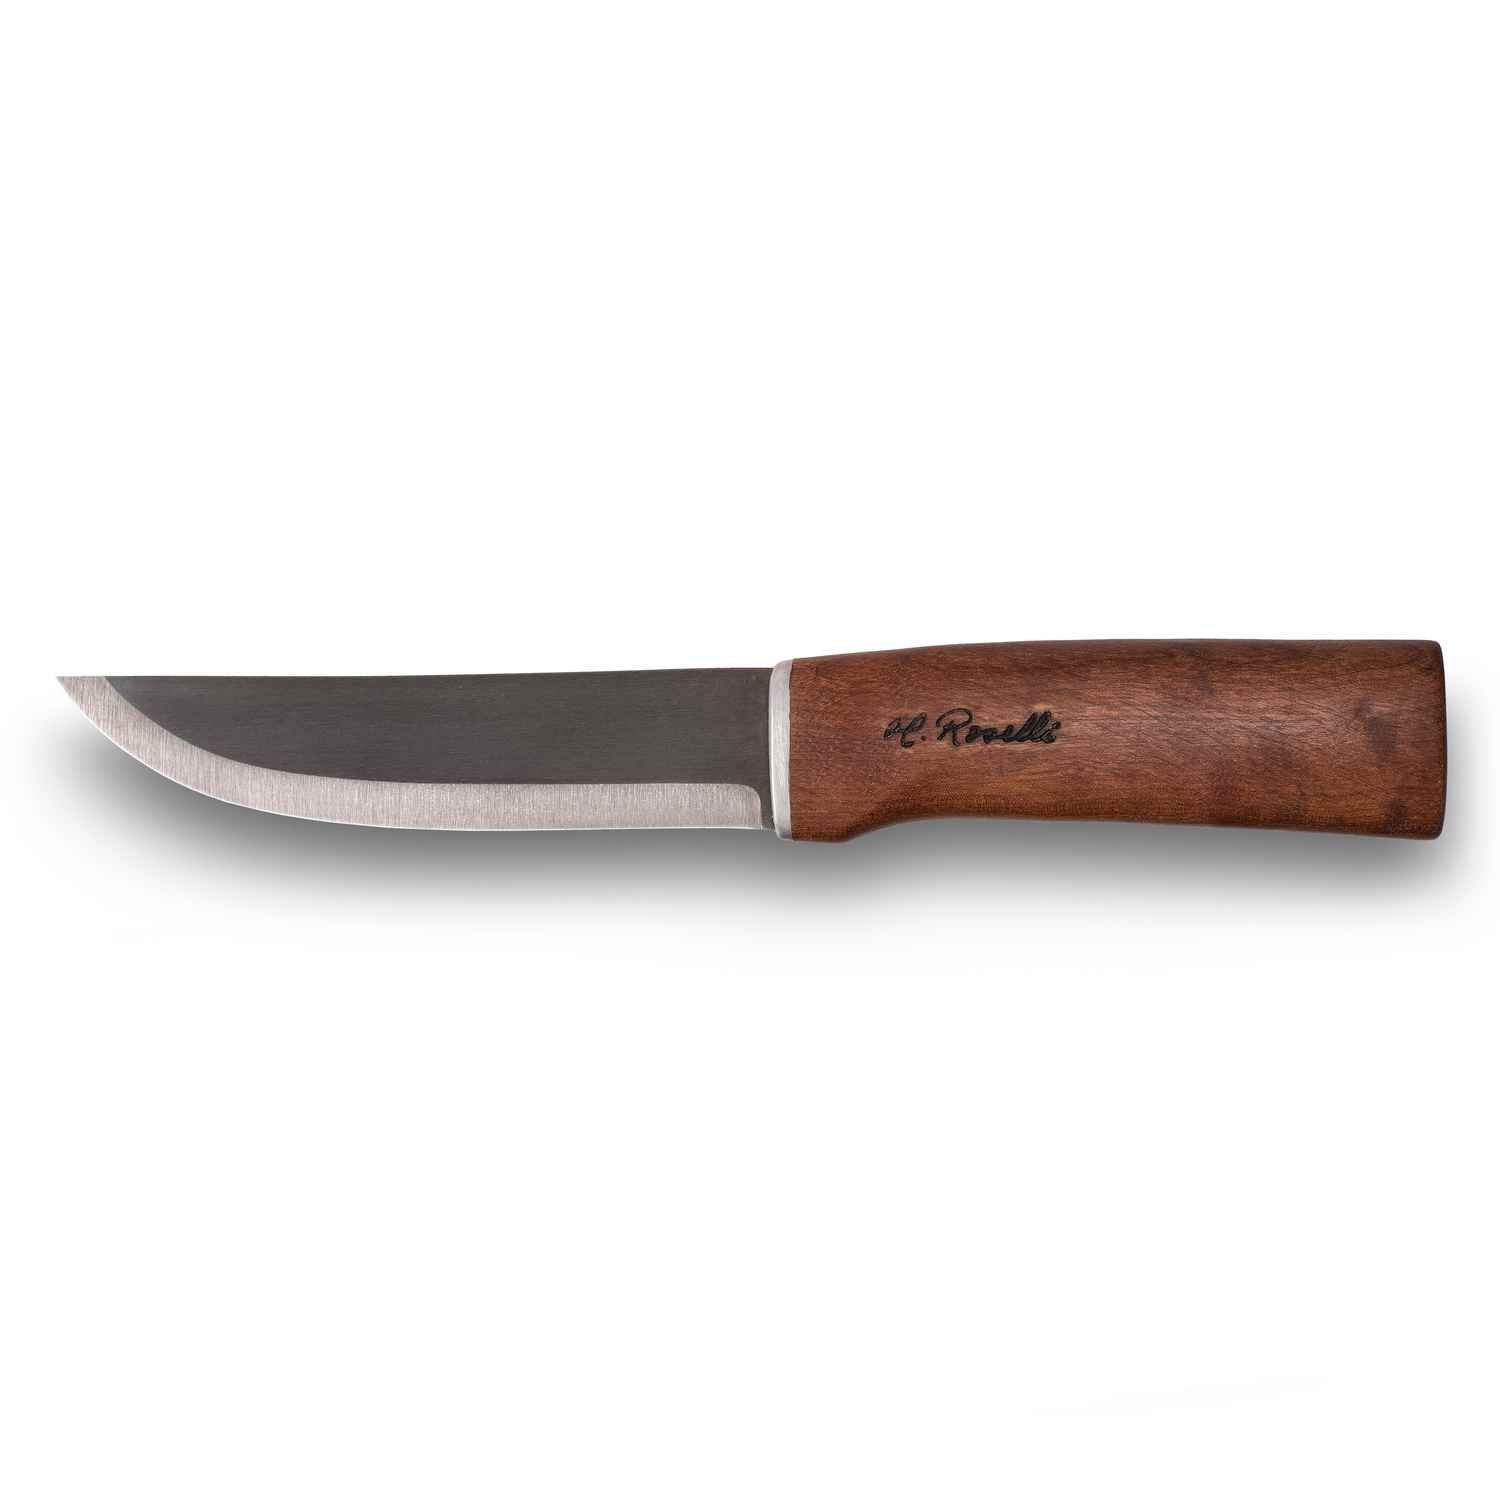 Roselli RW200L "UHC Hunting Knife" - long